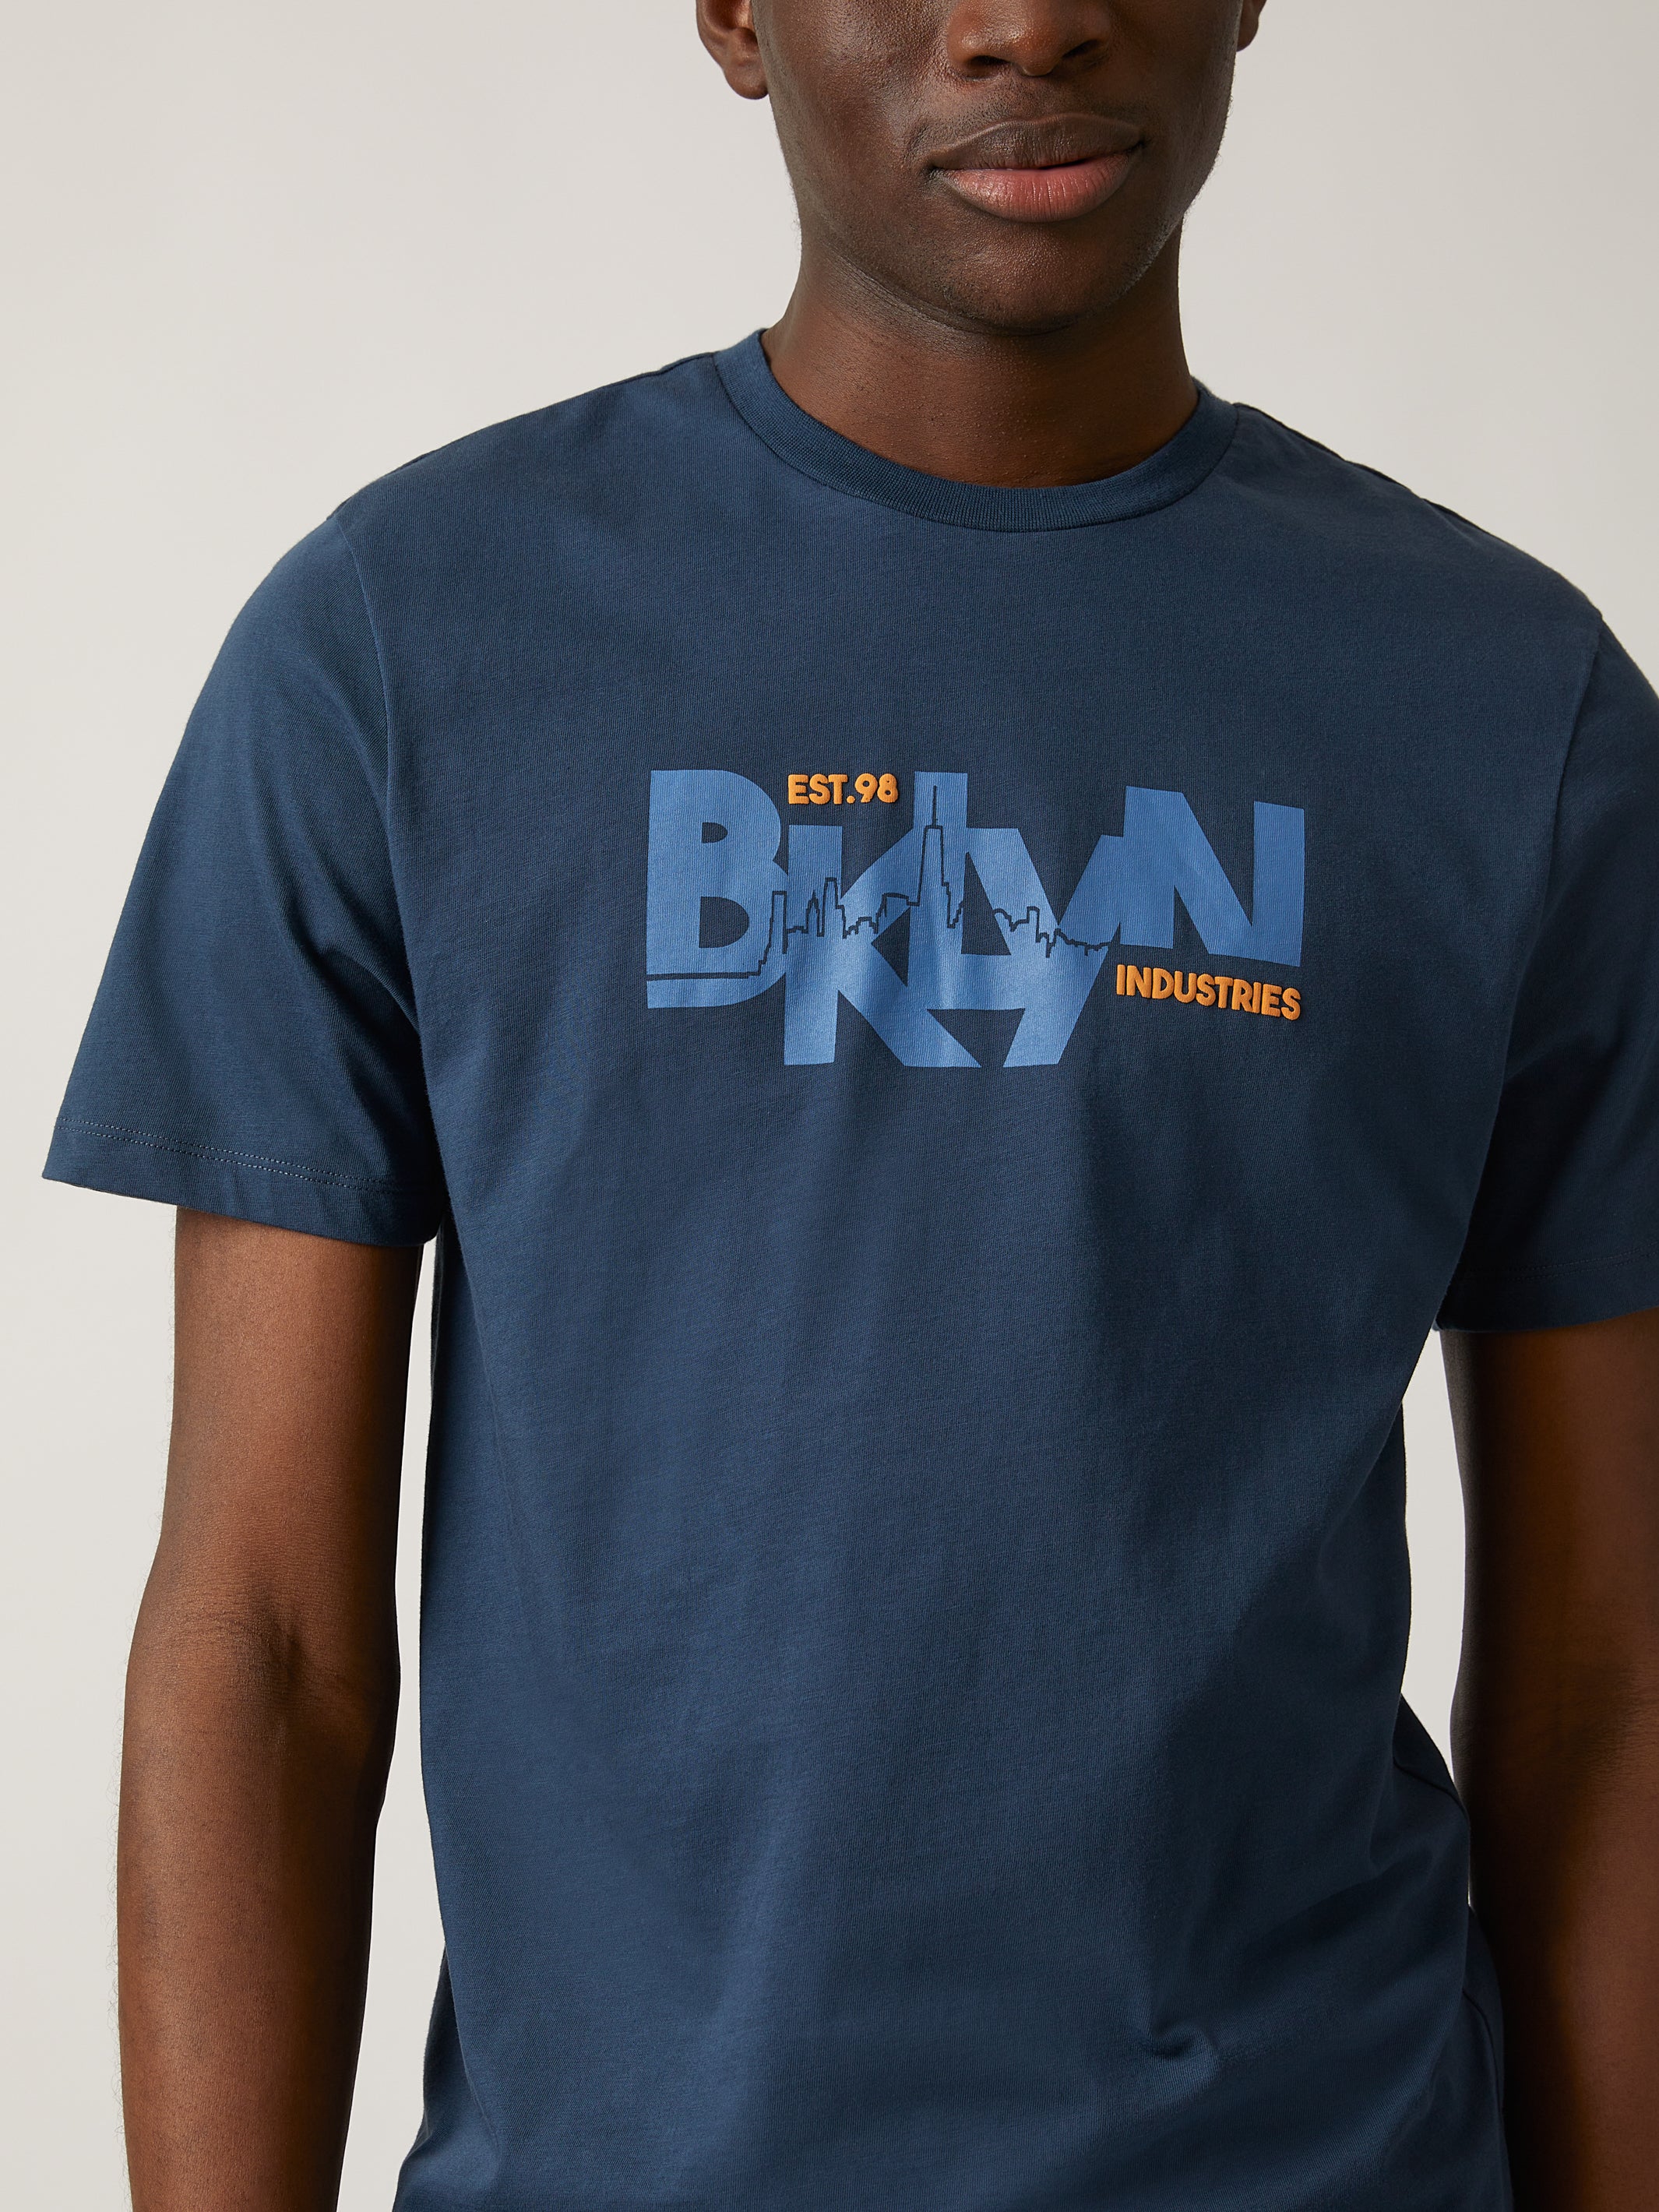 Men's Brooklyn T-shirt in Moonlit Ocean - BROOKLYN INDUSTRIES